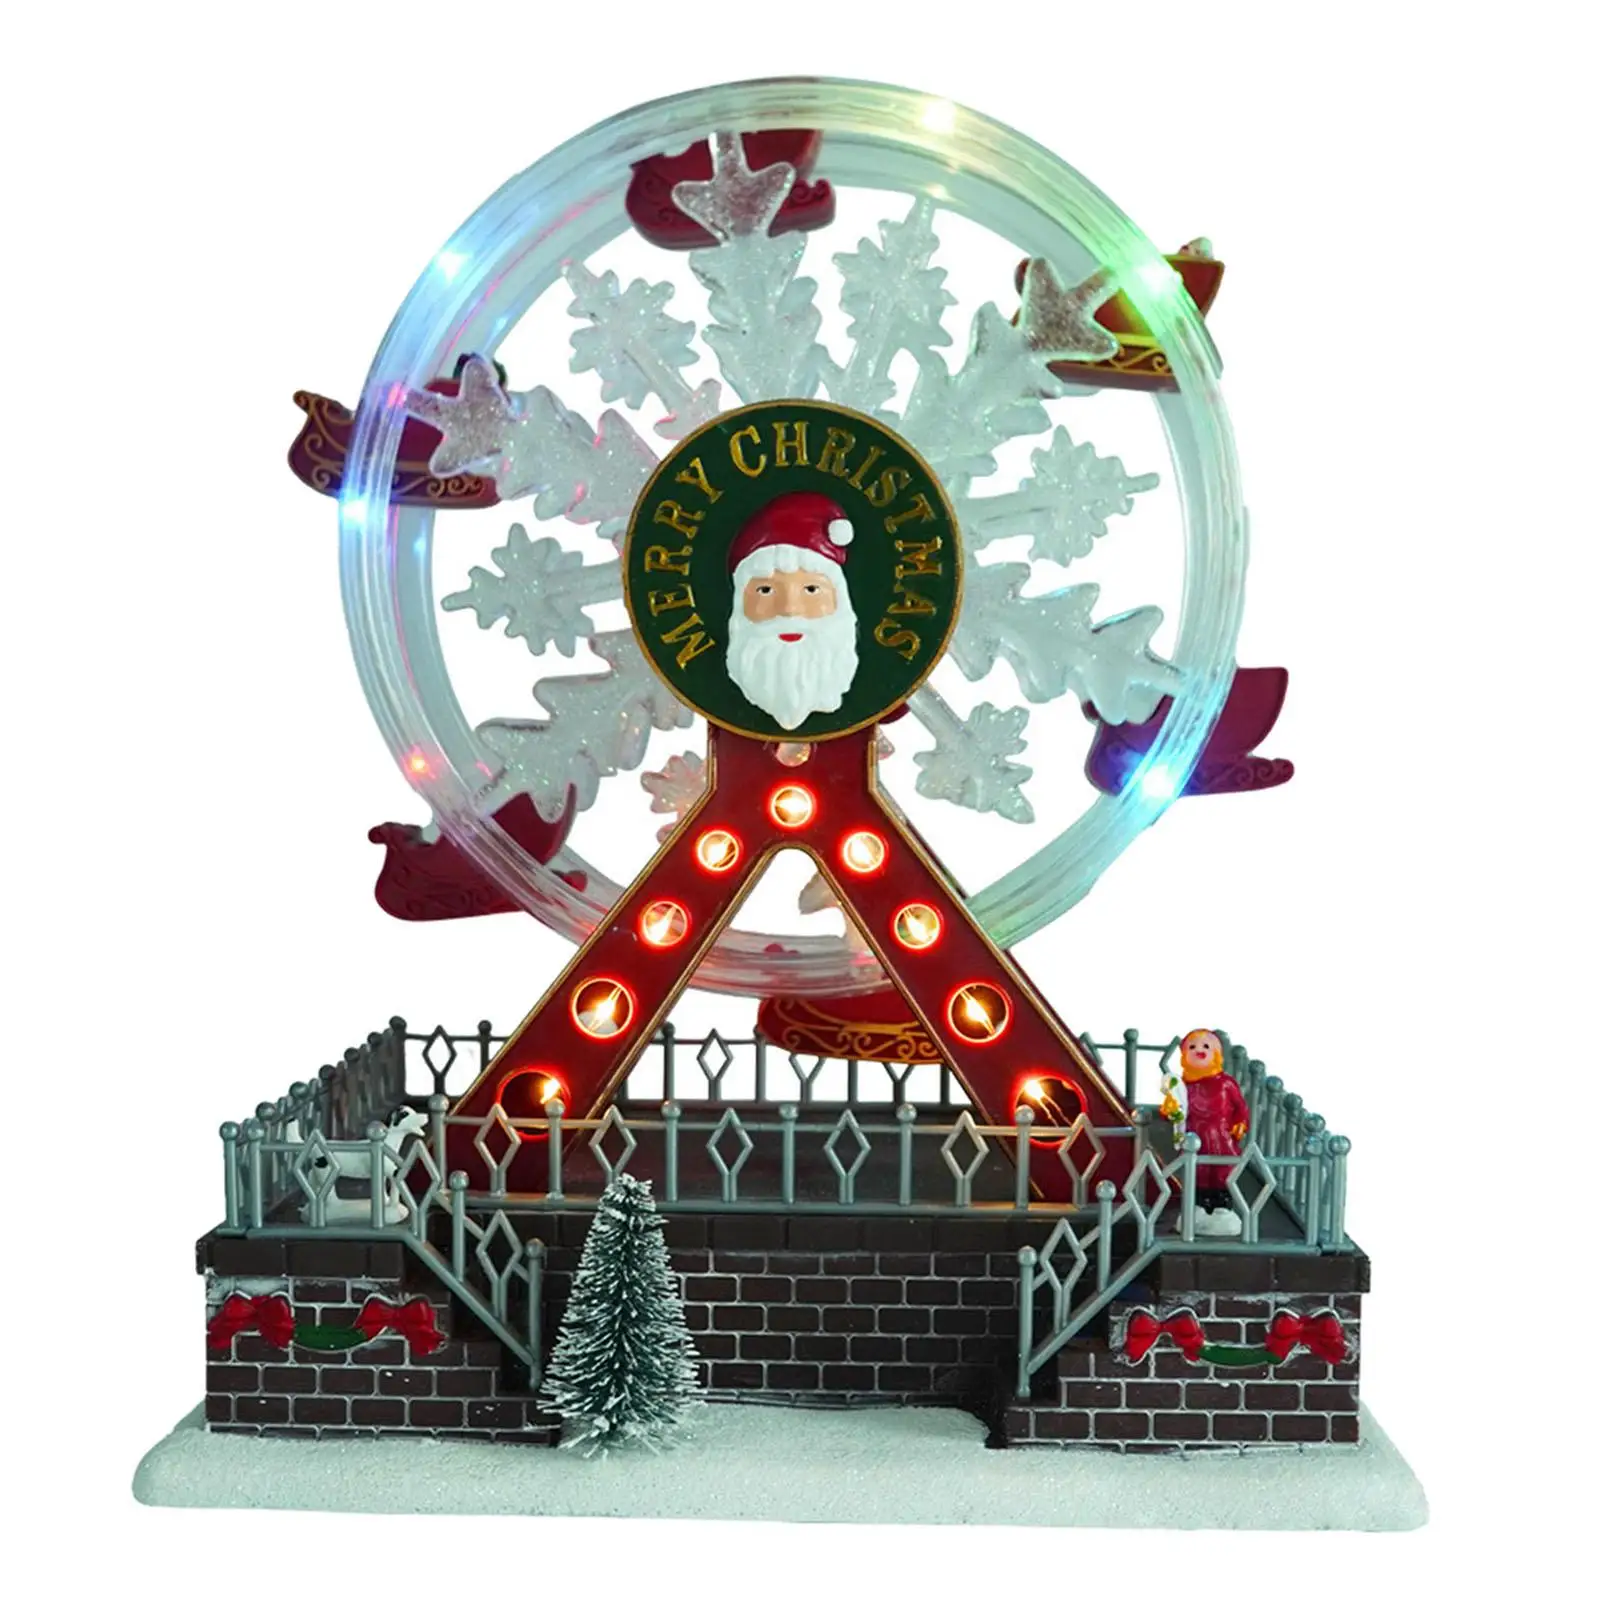 

Christmas Rotating Wheel Wheel Glowing Music Snow Village Displays Gifts